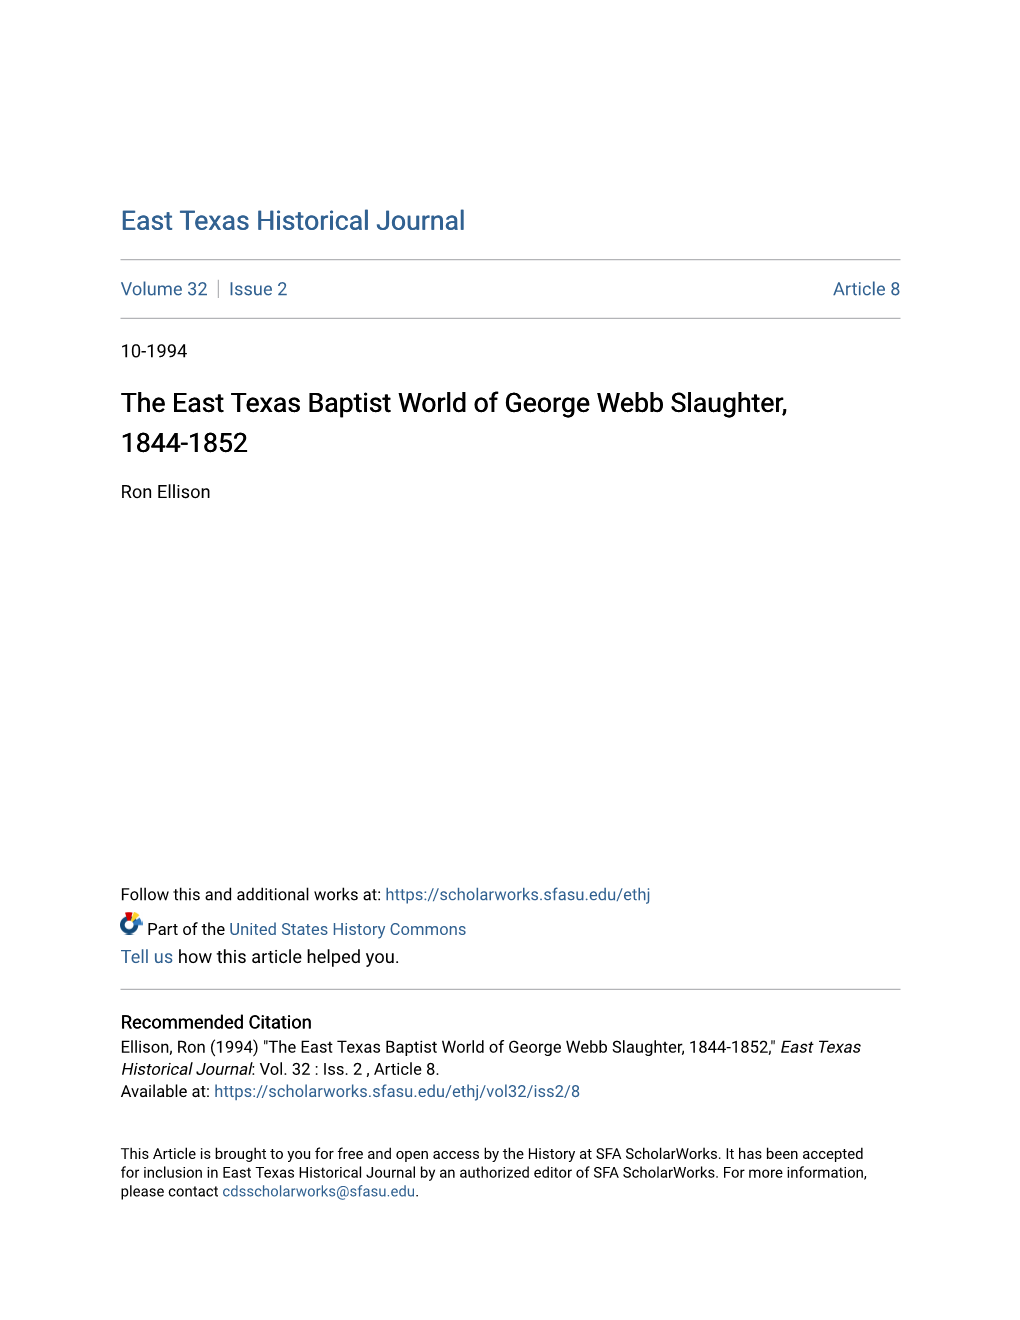 The East Texas Baptist World of George Webb Slaughter, 1844-1852